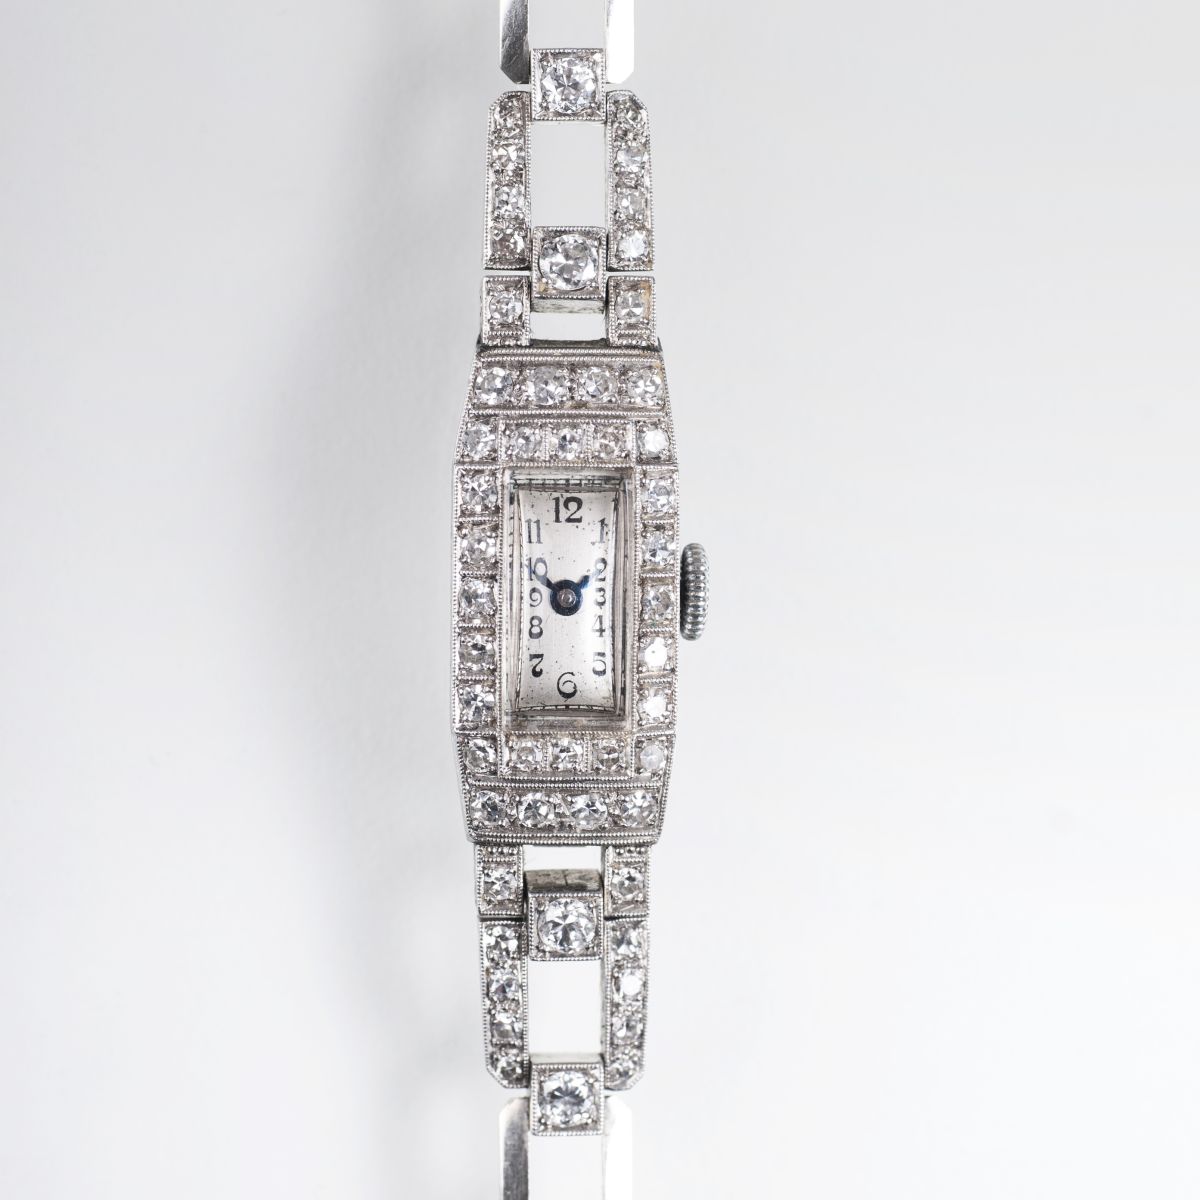 An Art Déco ladie's watch with diamonds